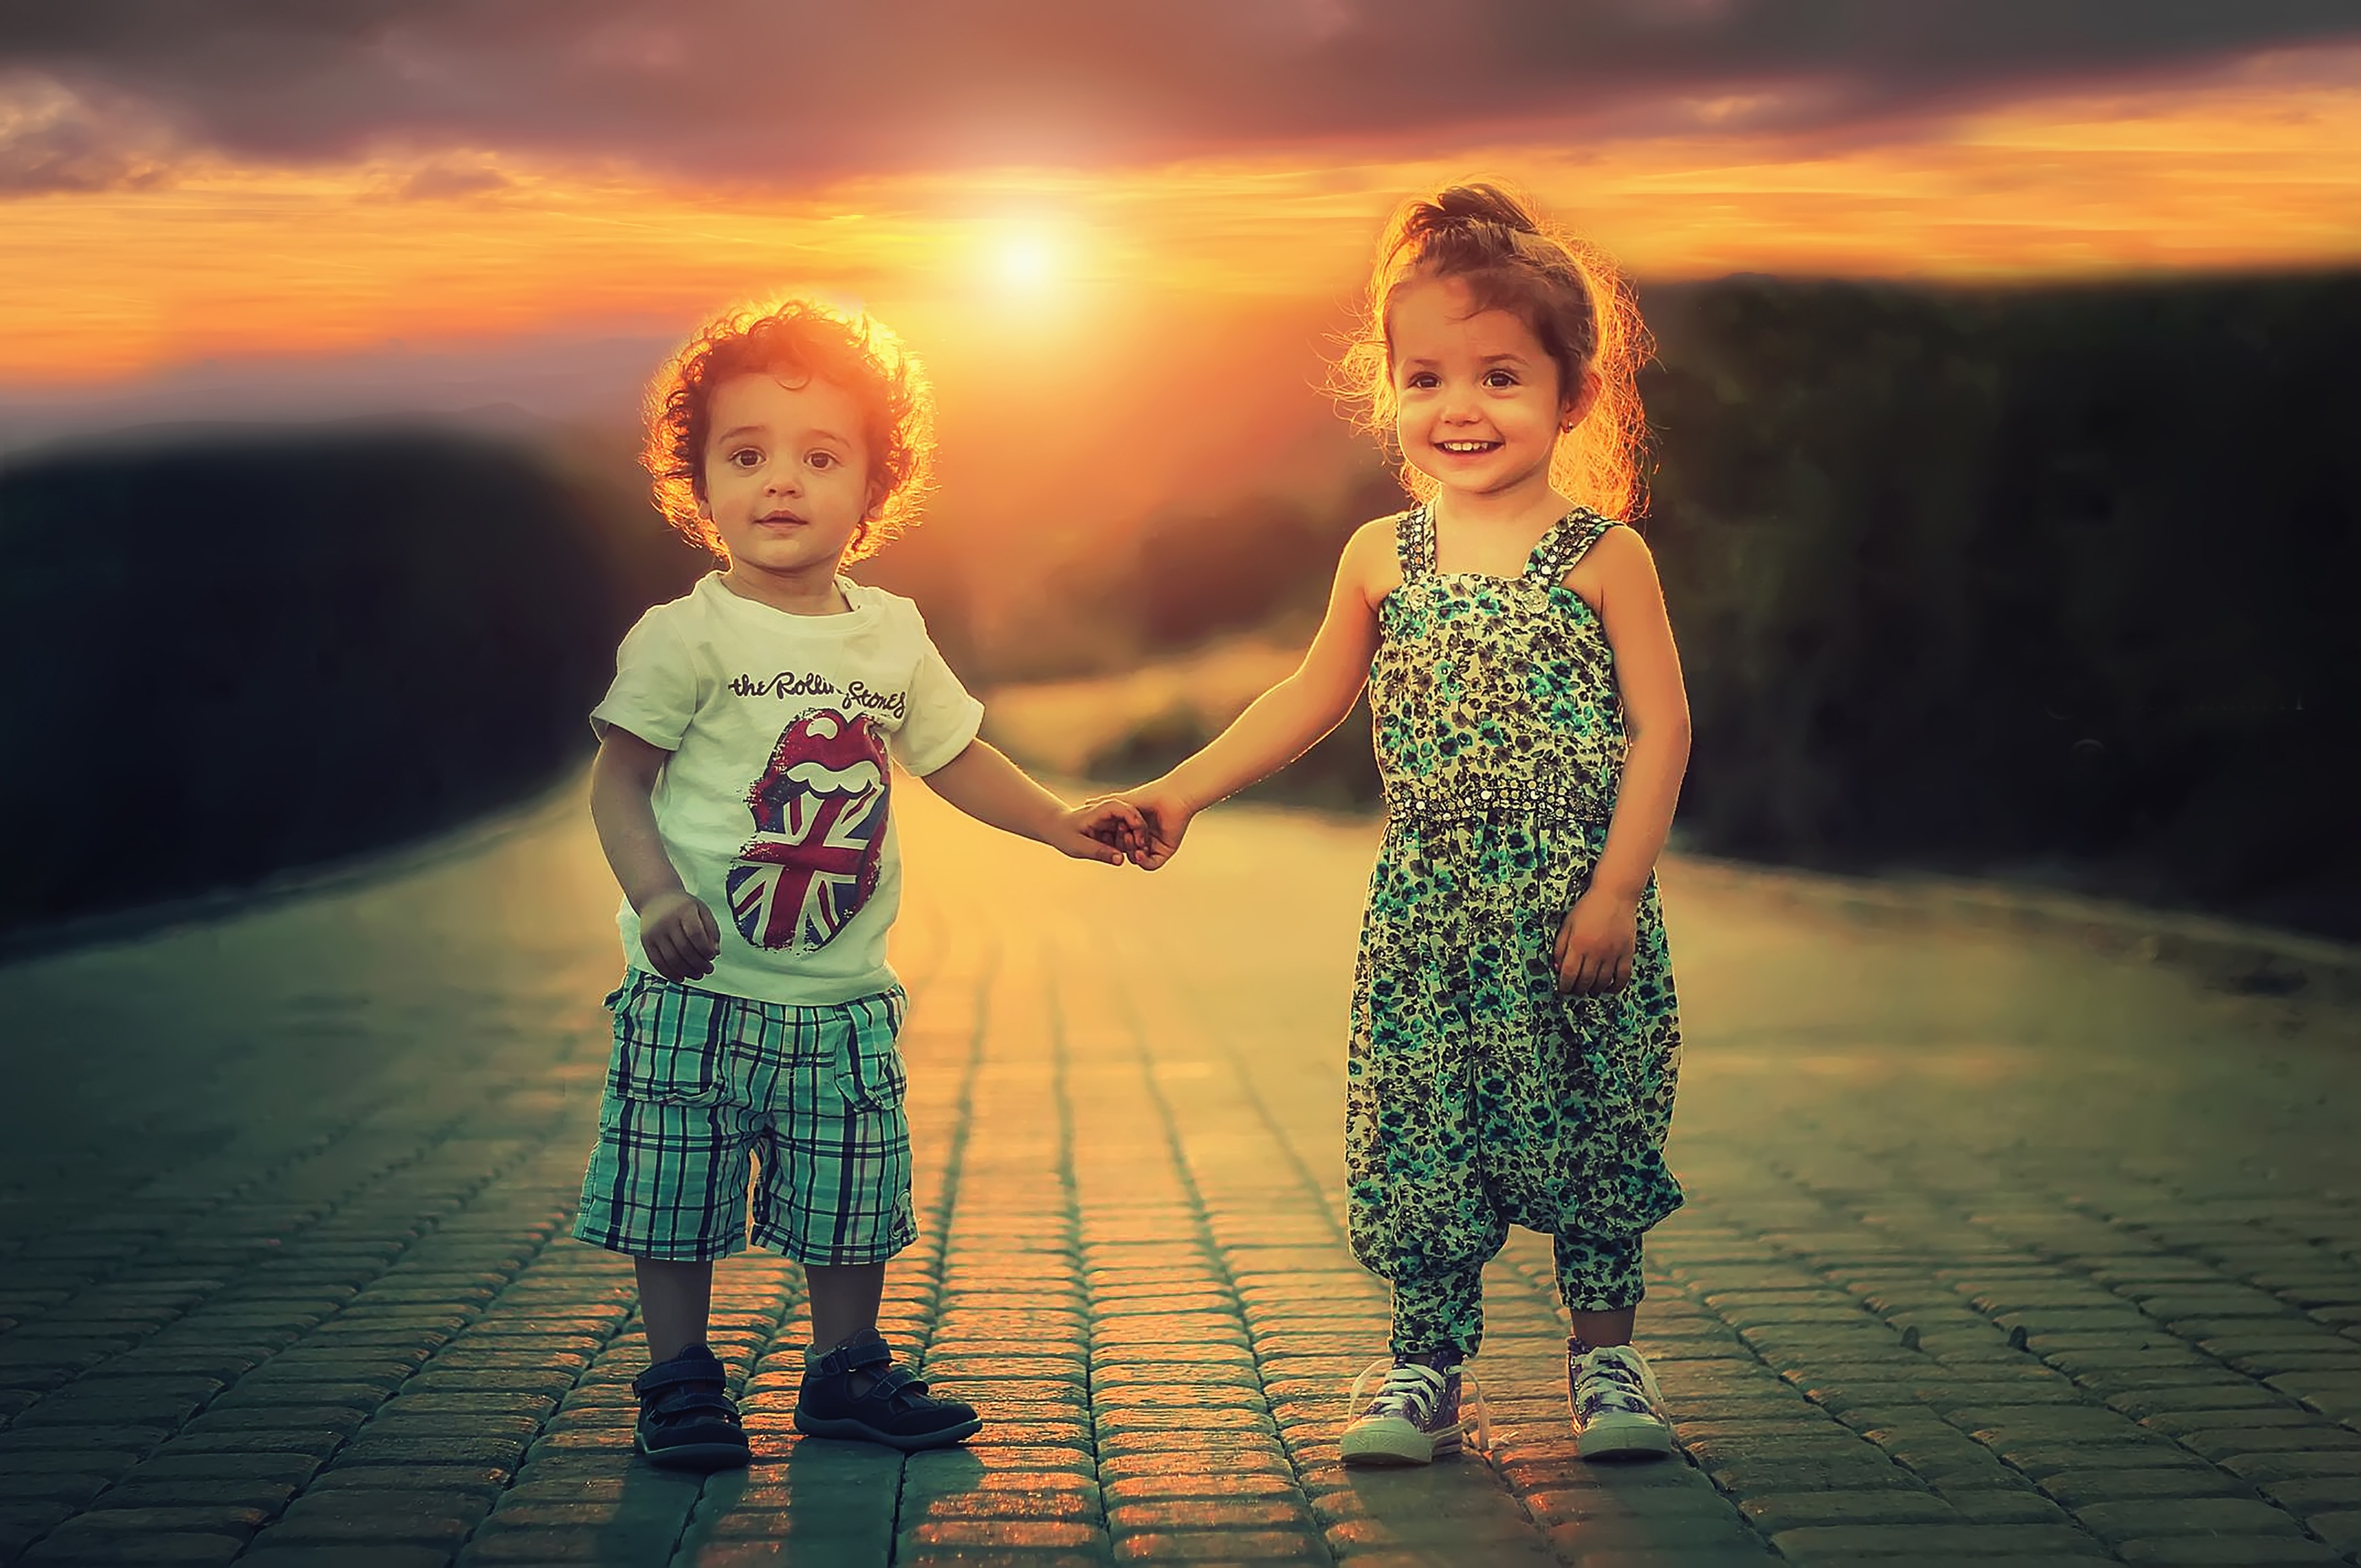 Детки держатся за руку на фоне заката